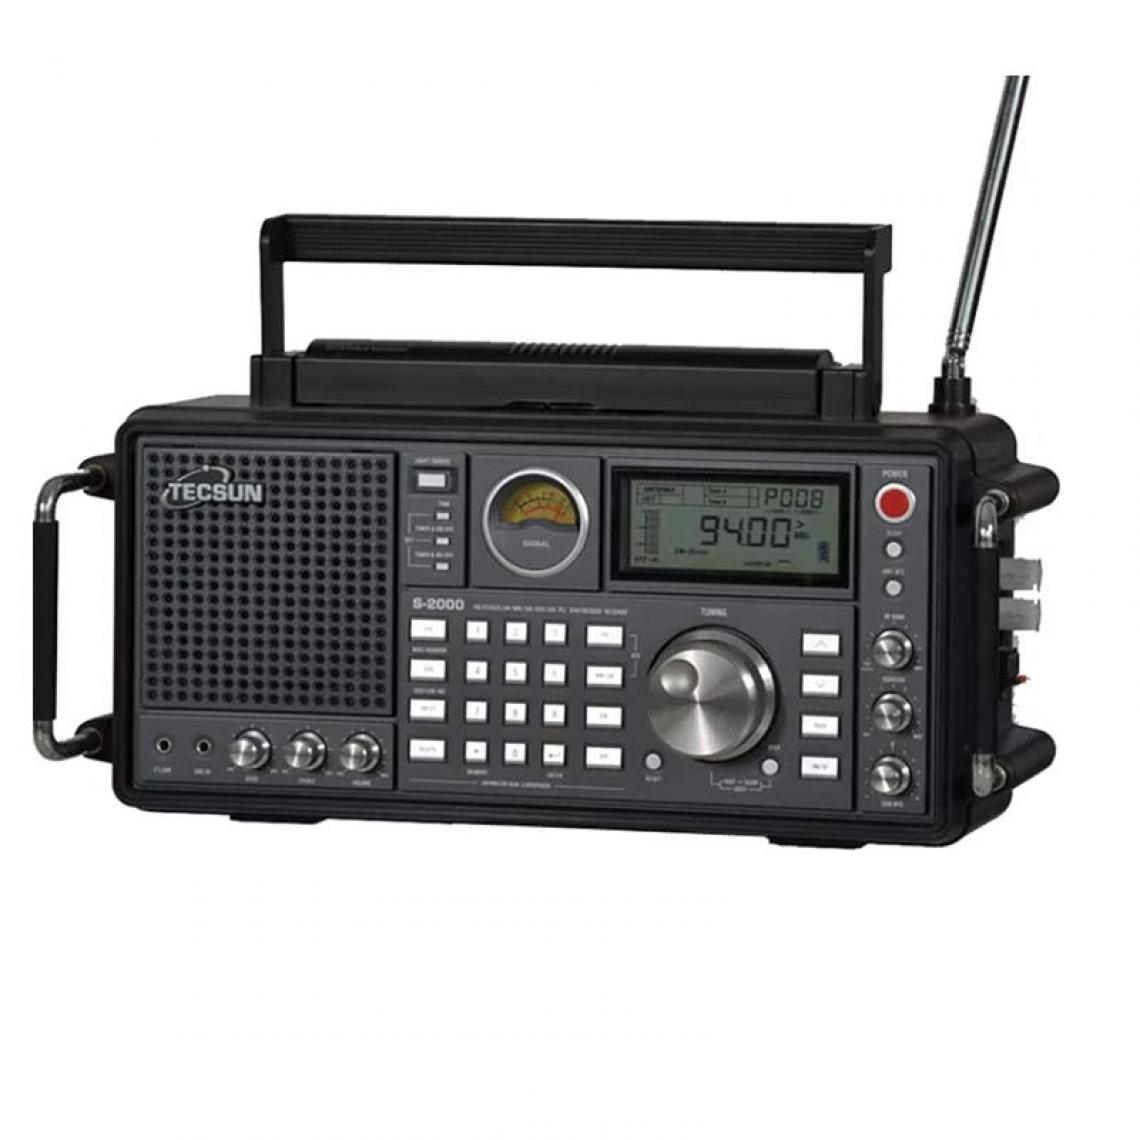 Universal - S 2000 Ham Radio Portable SSB Double Conversion PLL FM/MW/SW/LW Air Band 87 108 MHz/76 108 MHz Internet Radio | Radio Control Car Truck | Radio Control(Le noir) - Radio